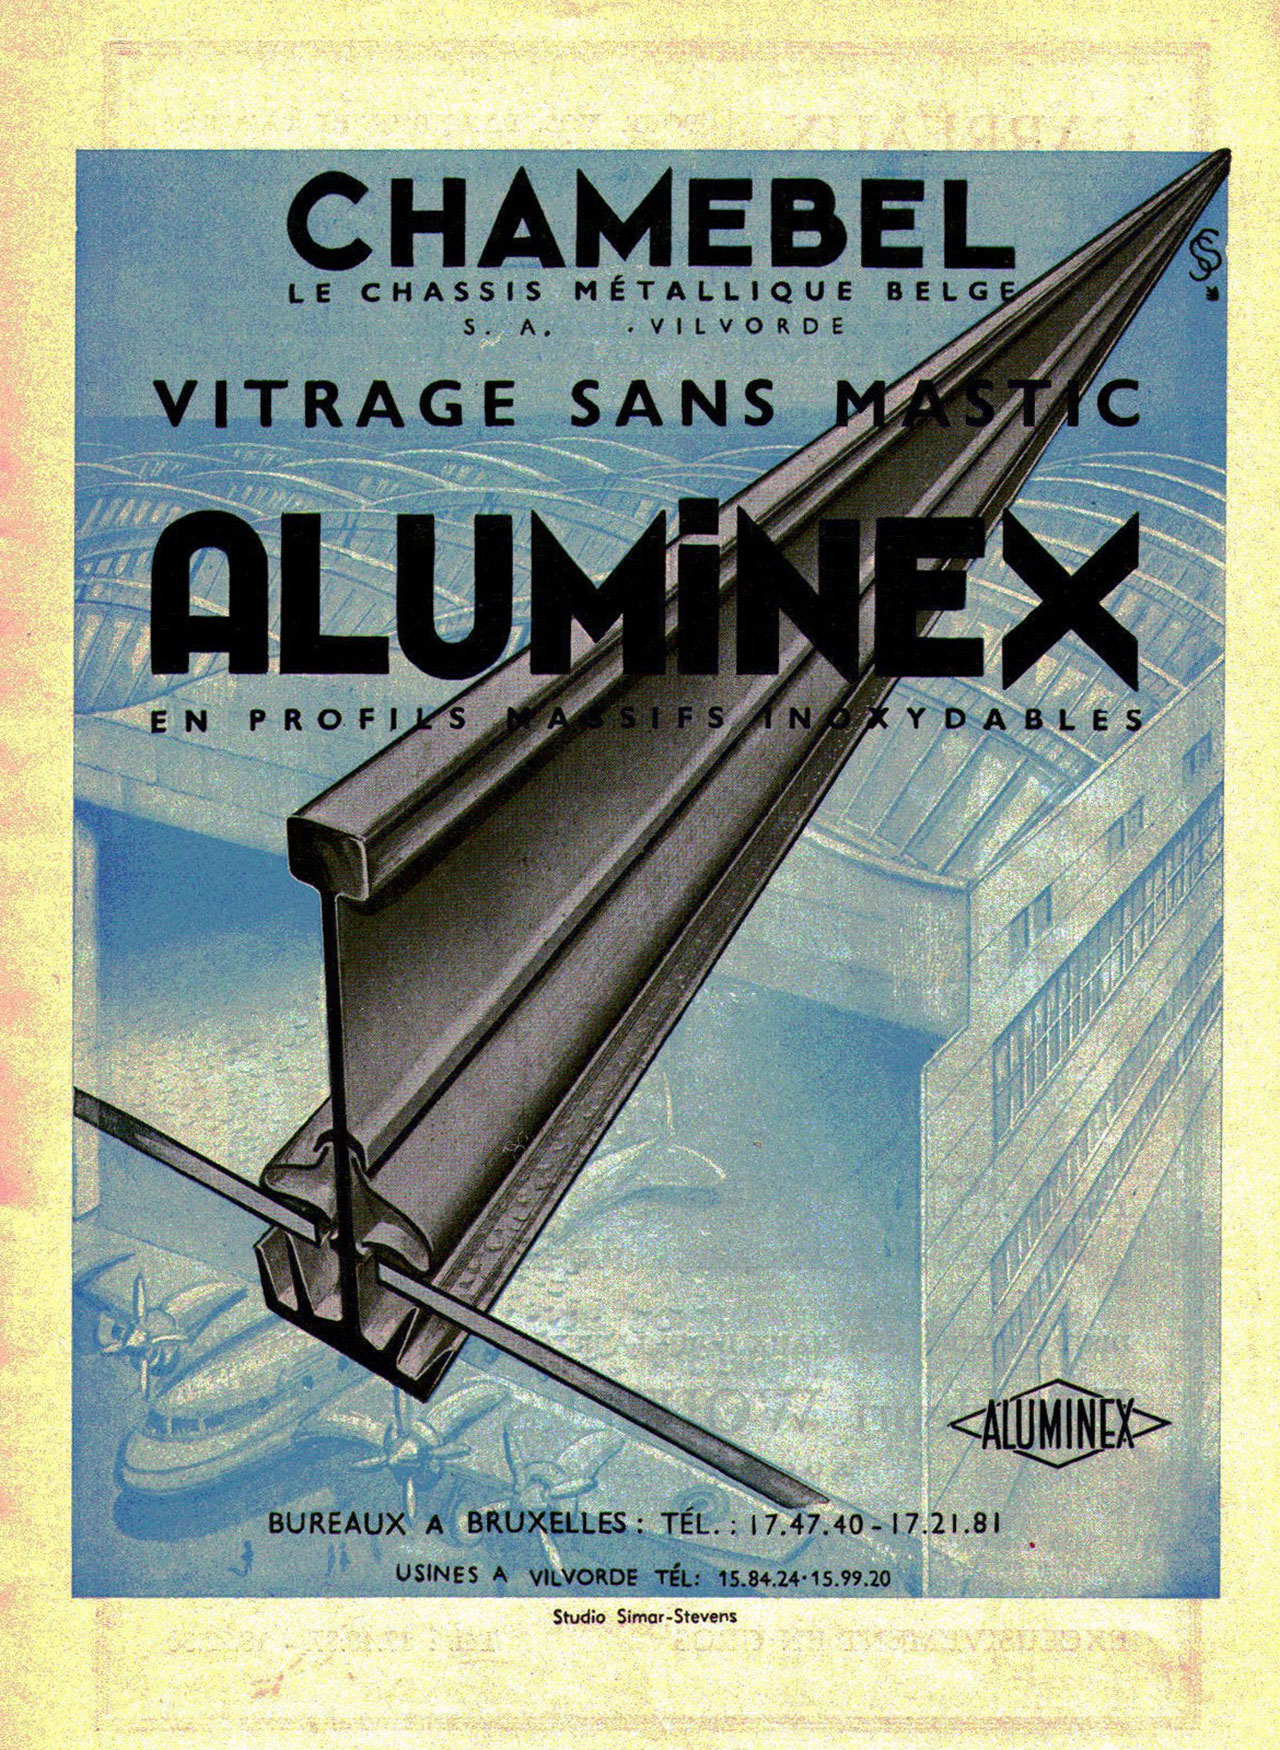 Aluminex